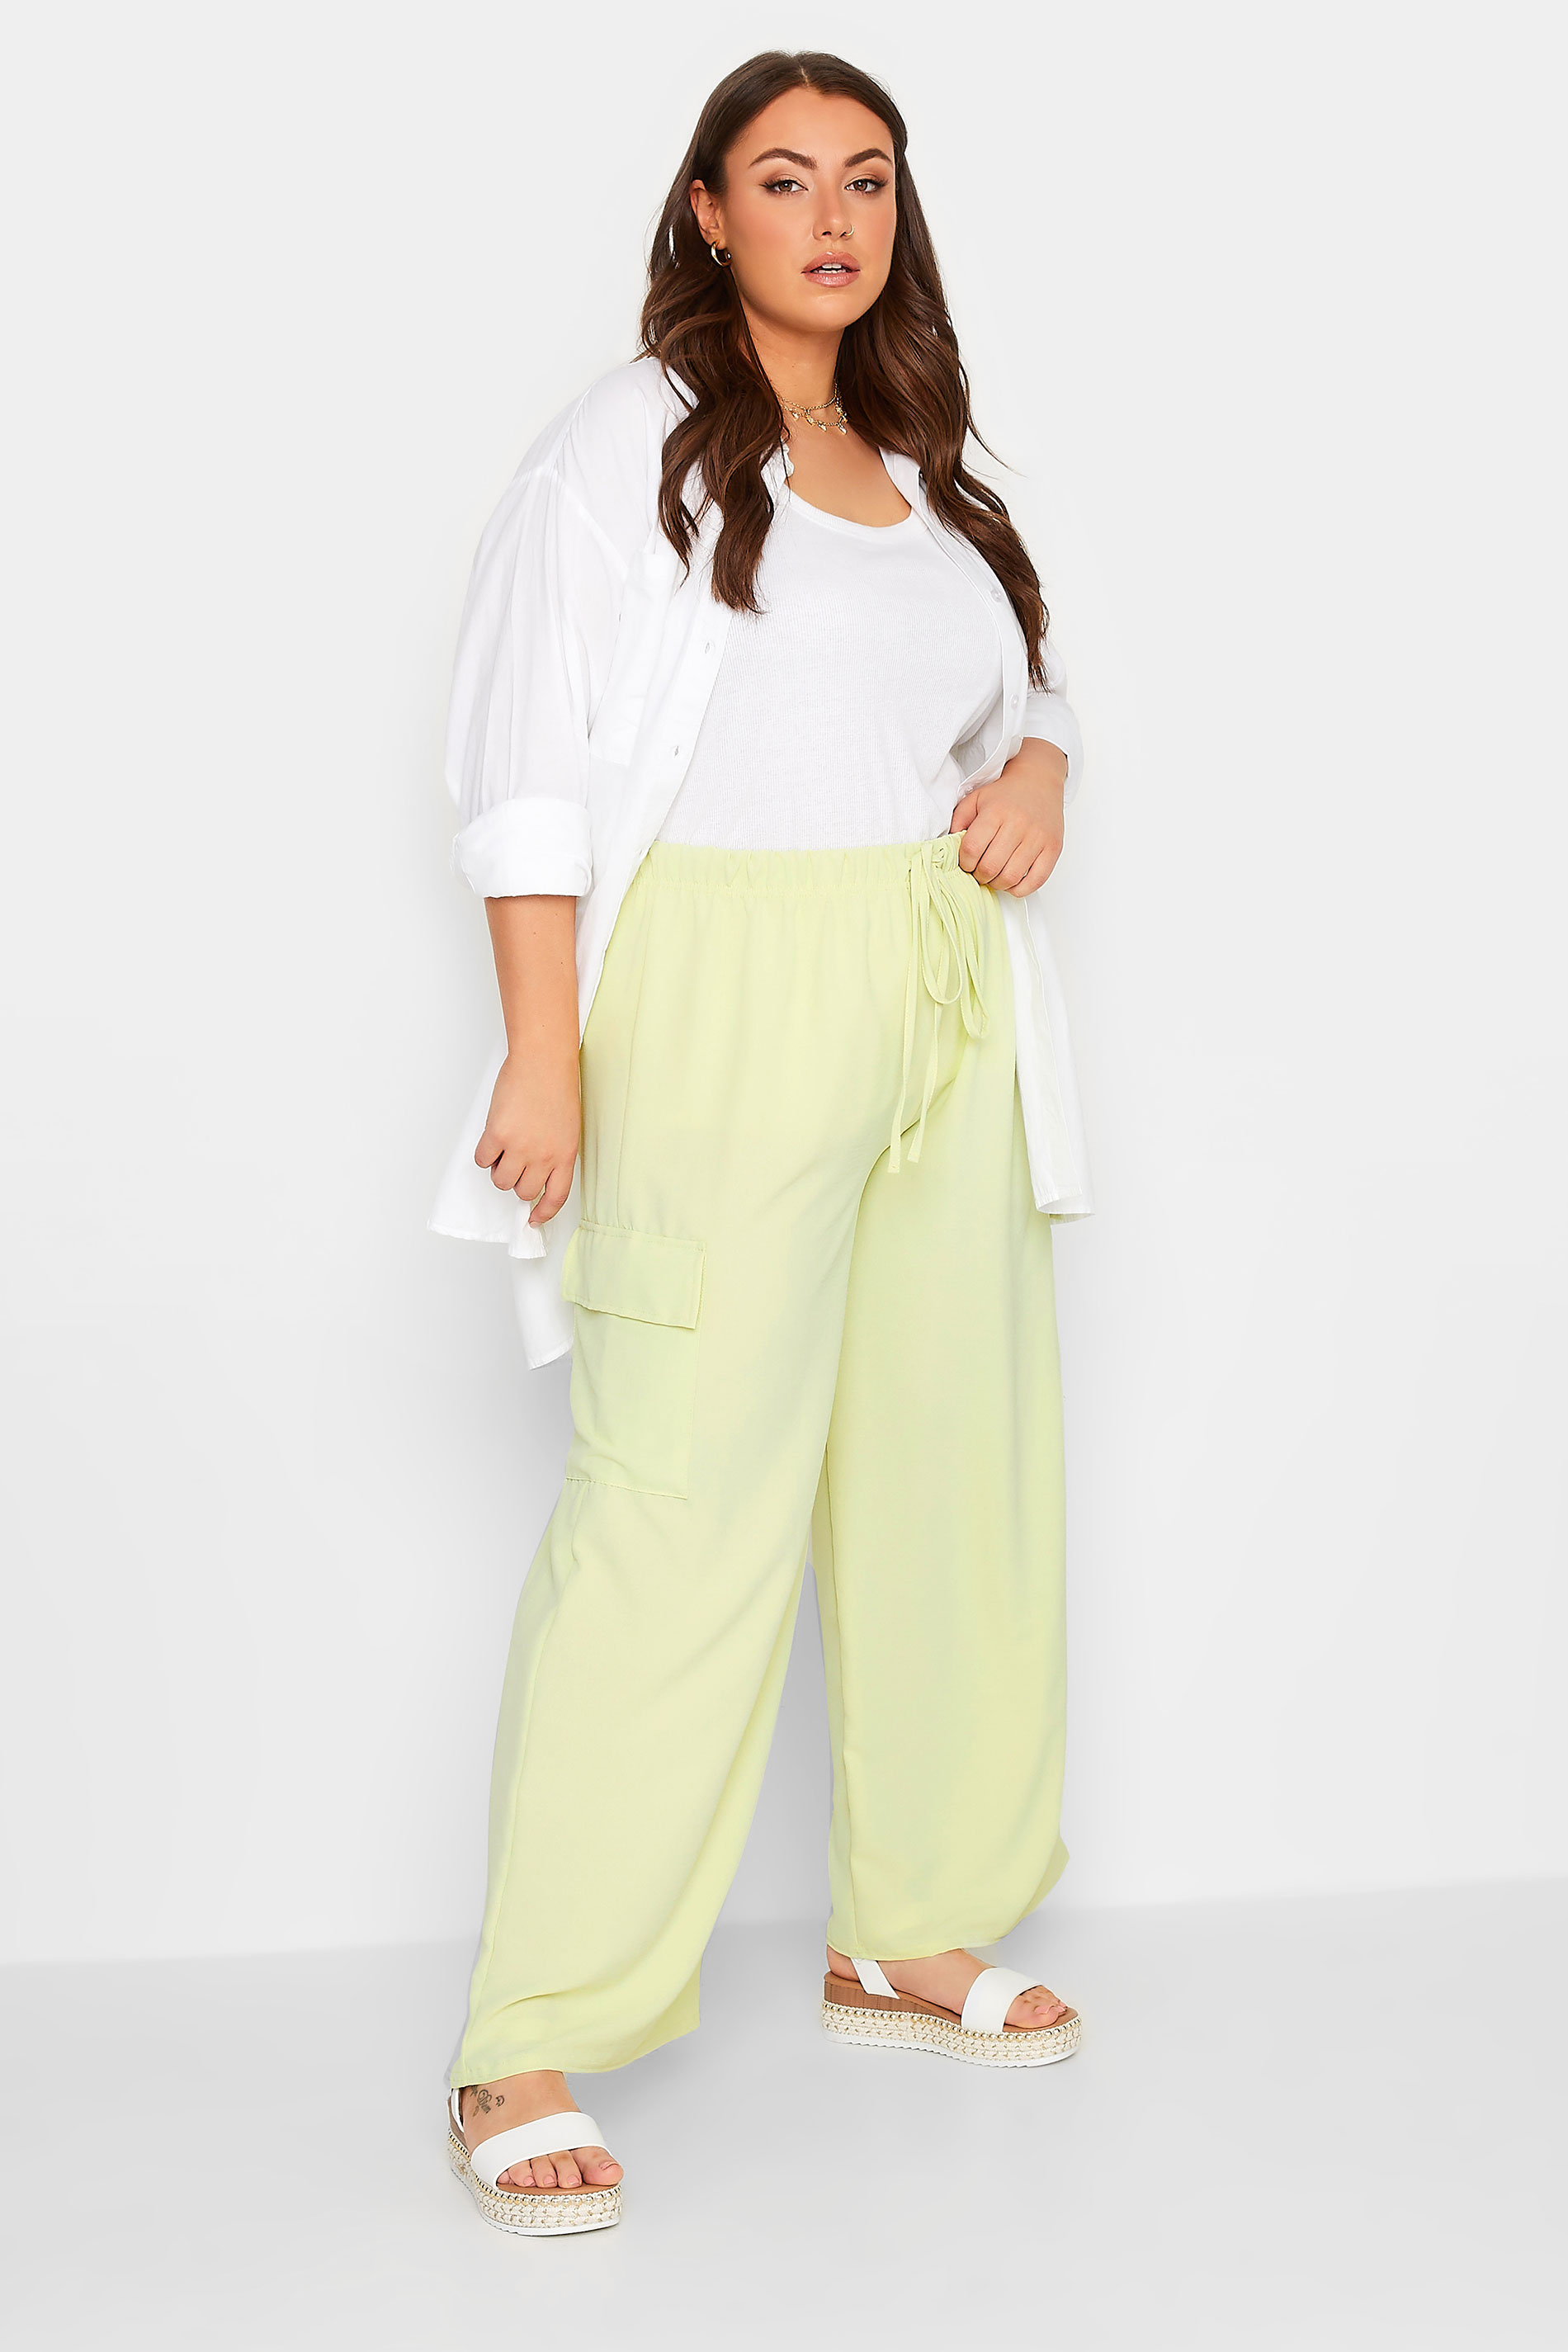 Zara Lime Green Textured Trousers Pants Size Medium Ref 2783 469 | eBay